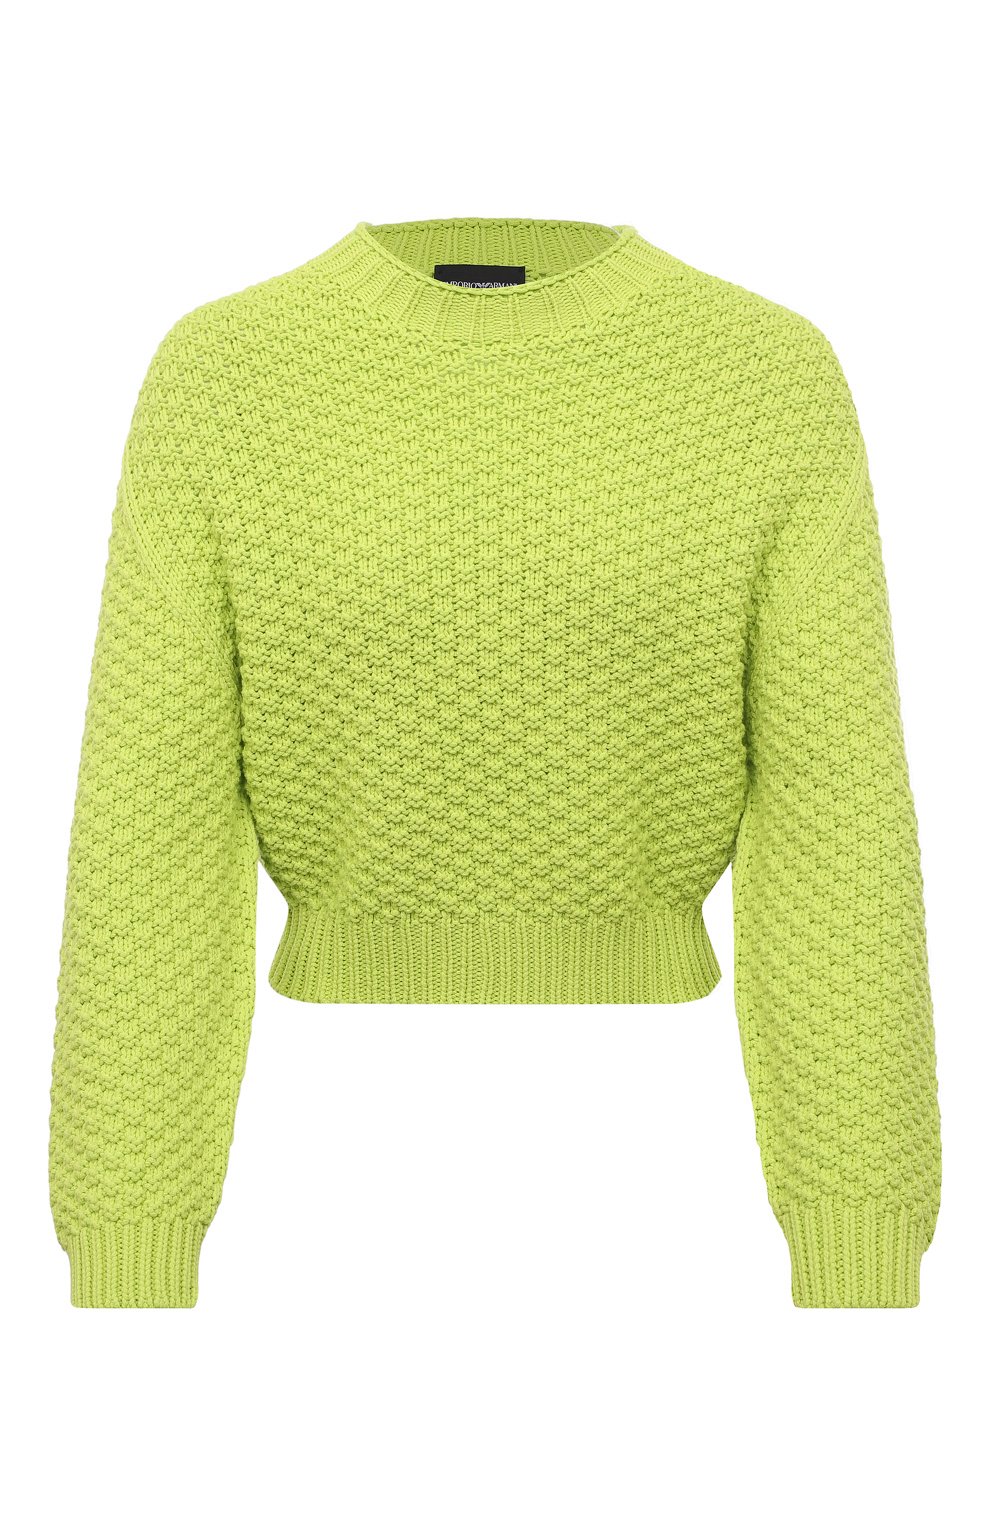 Хлопковый свитер Emporio Armani 3R2MW6/2M14Z, цвет зелёный, размер 44 3R2MW6/2M14Z - фото 1